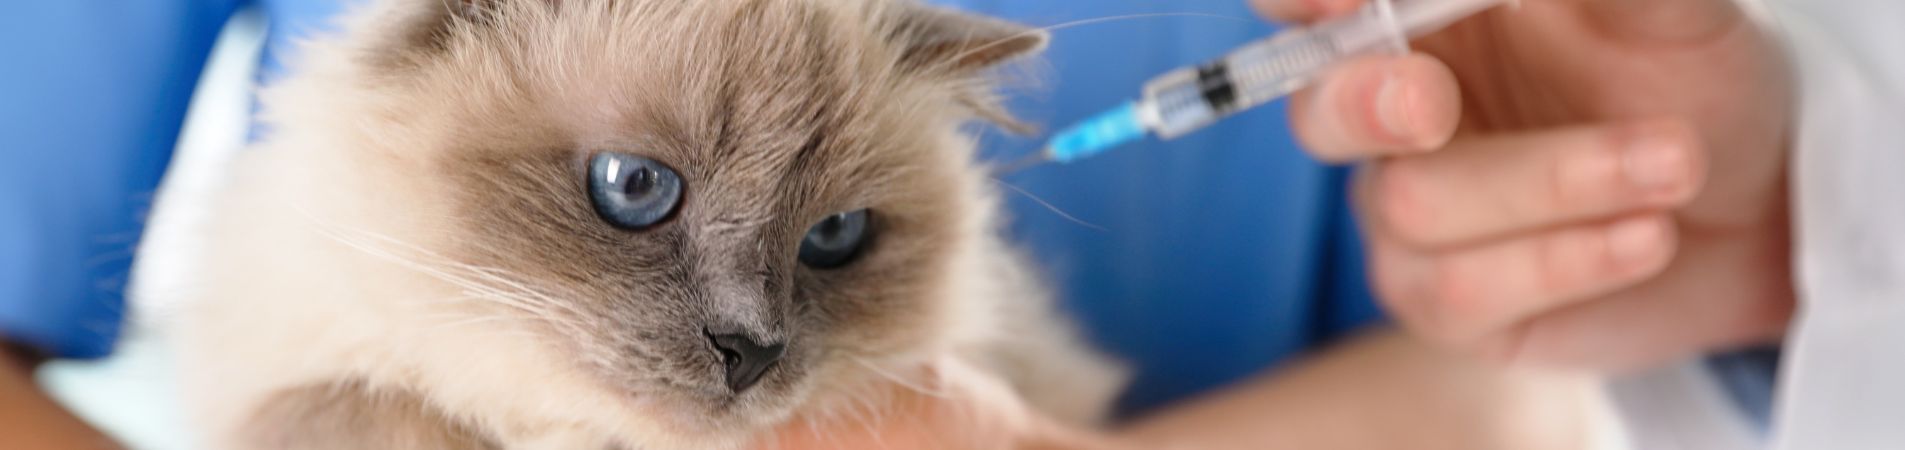 Chat qui se fait vacciner